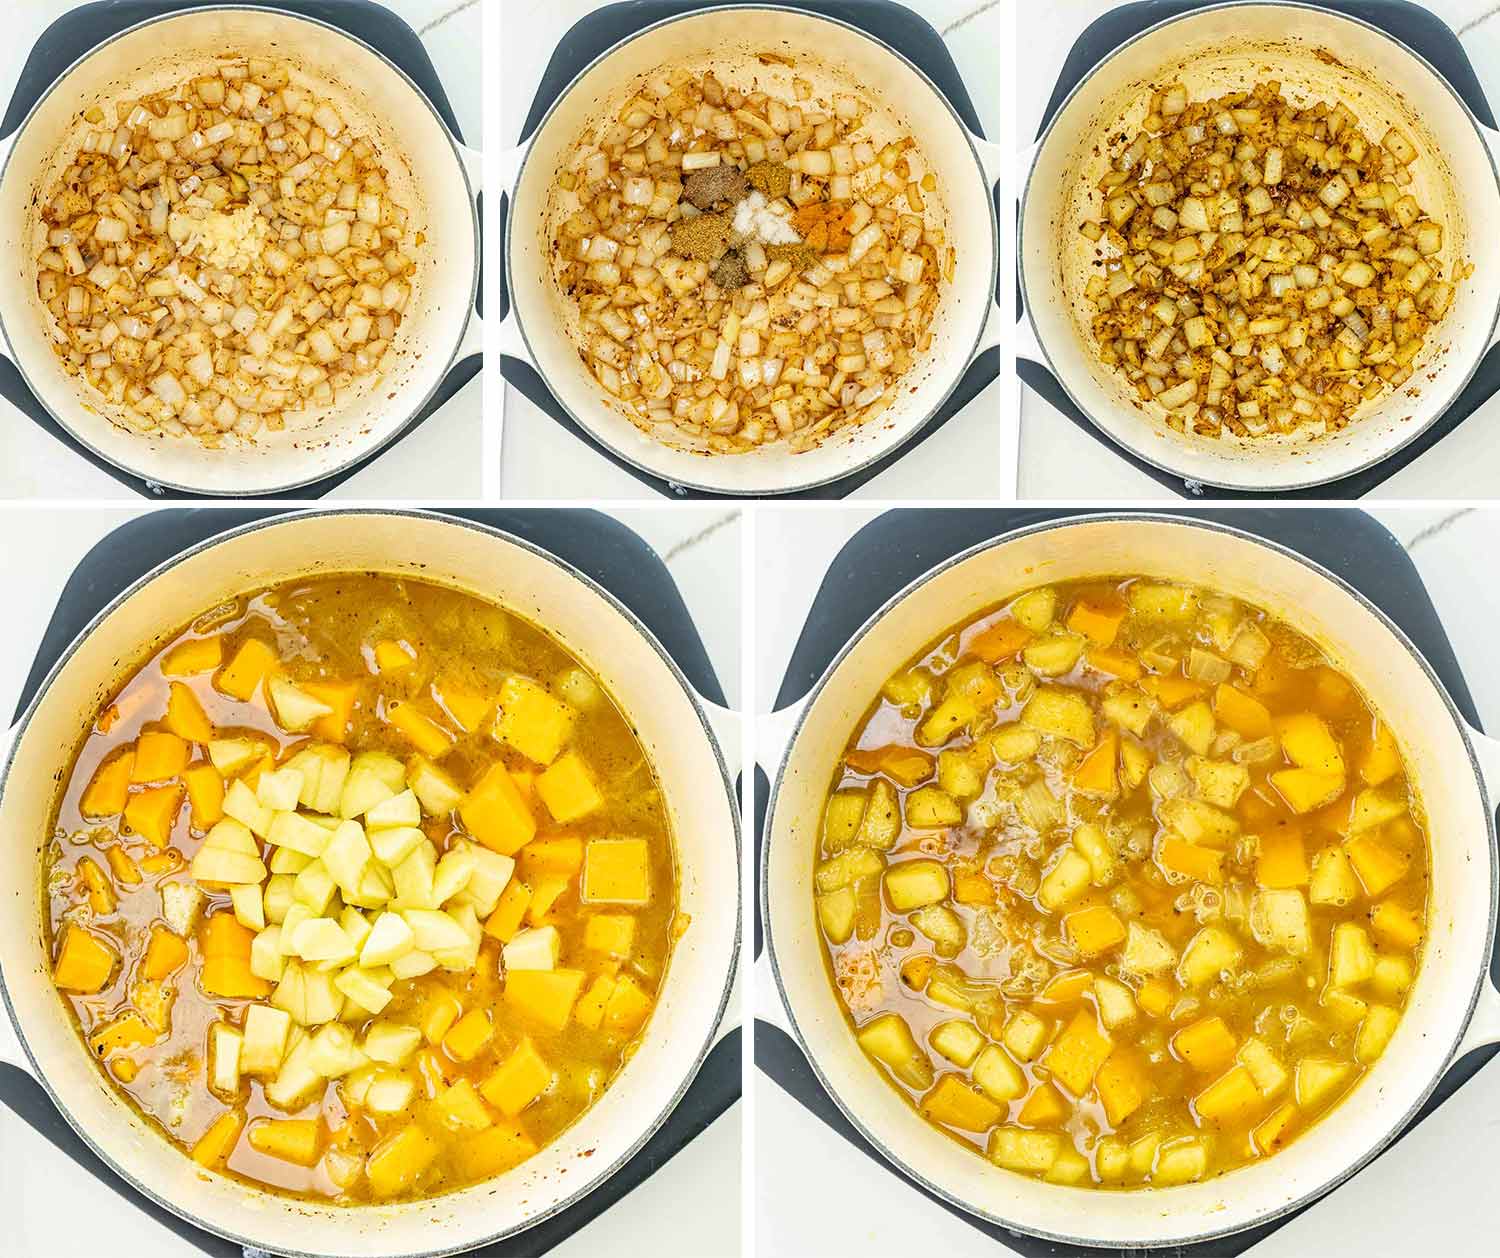 process shots showing how to make butternut squash soup.